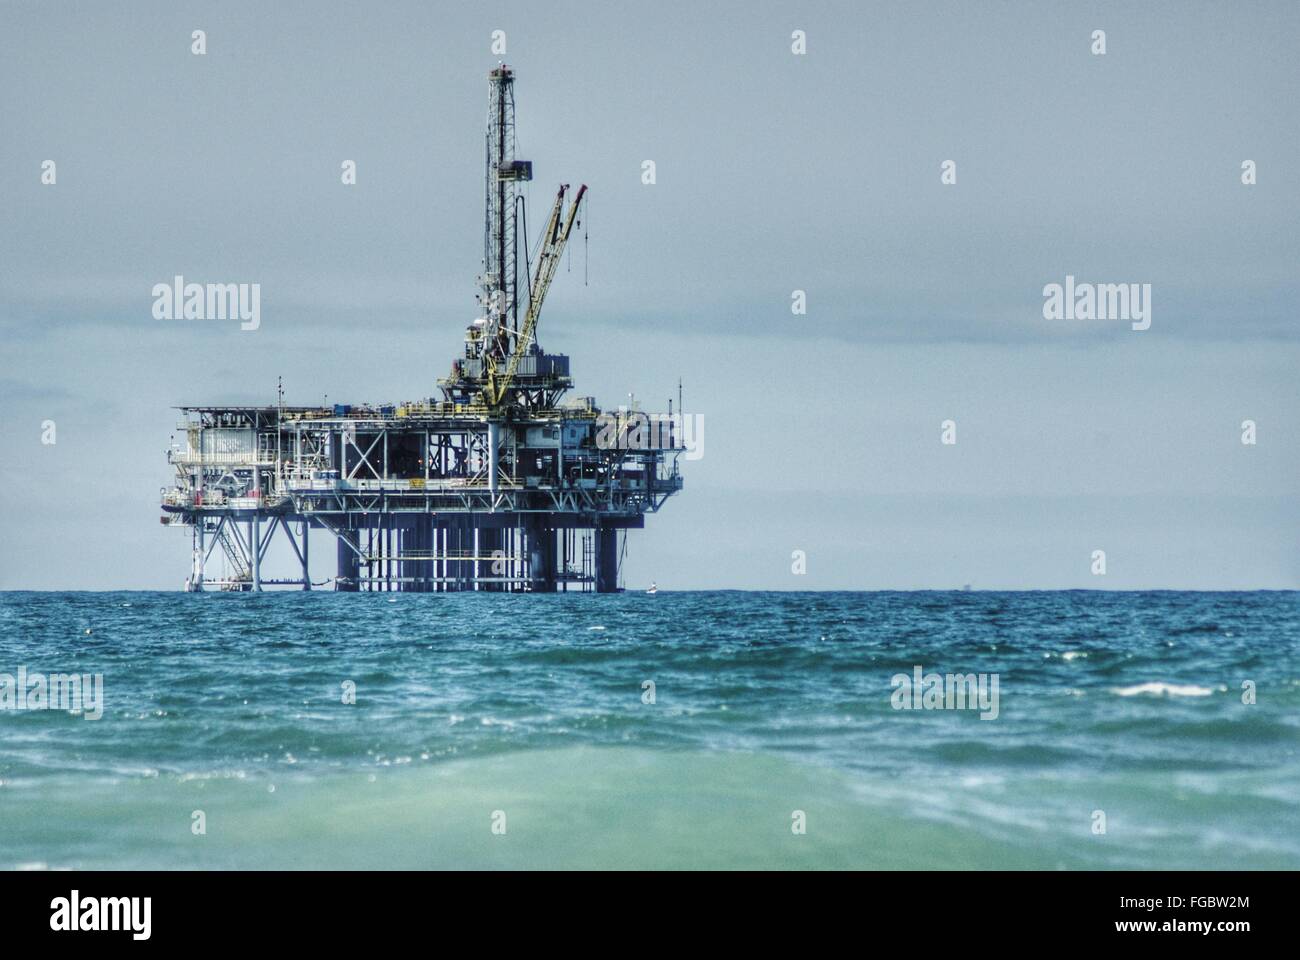 Oil Rig In Sea Against Sky Stock Photo